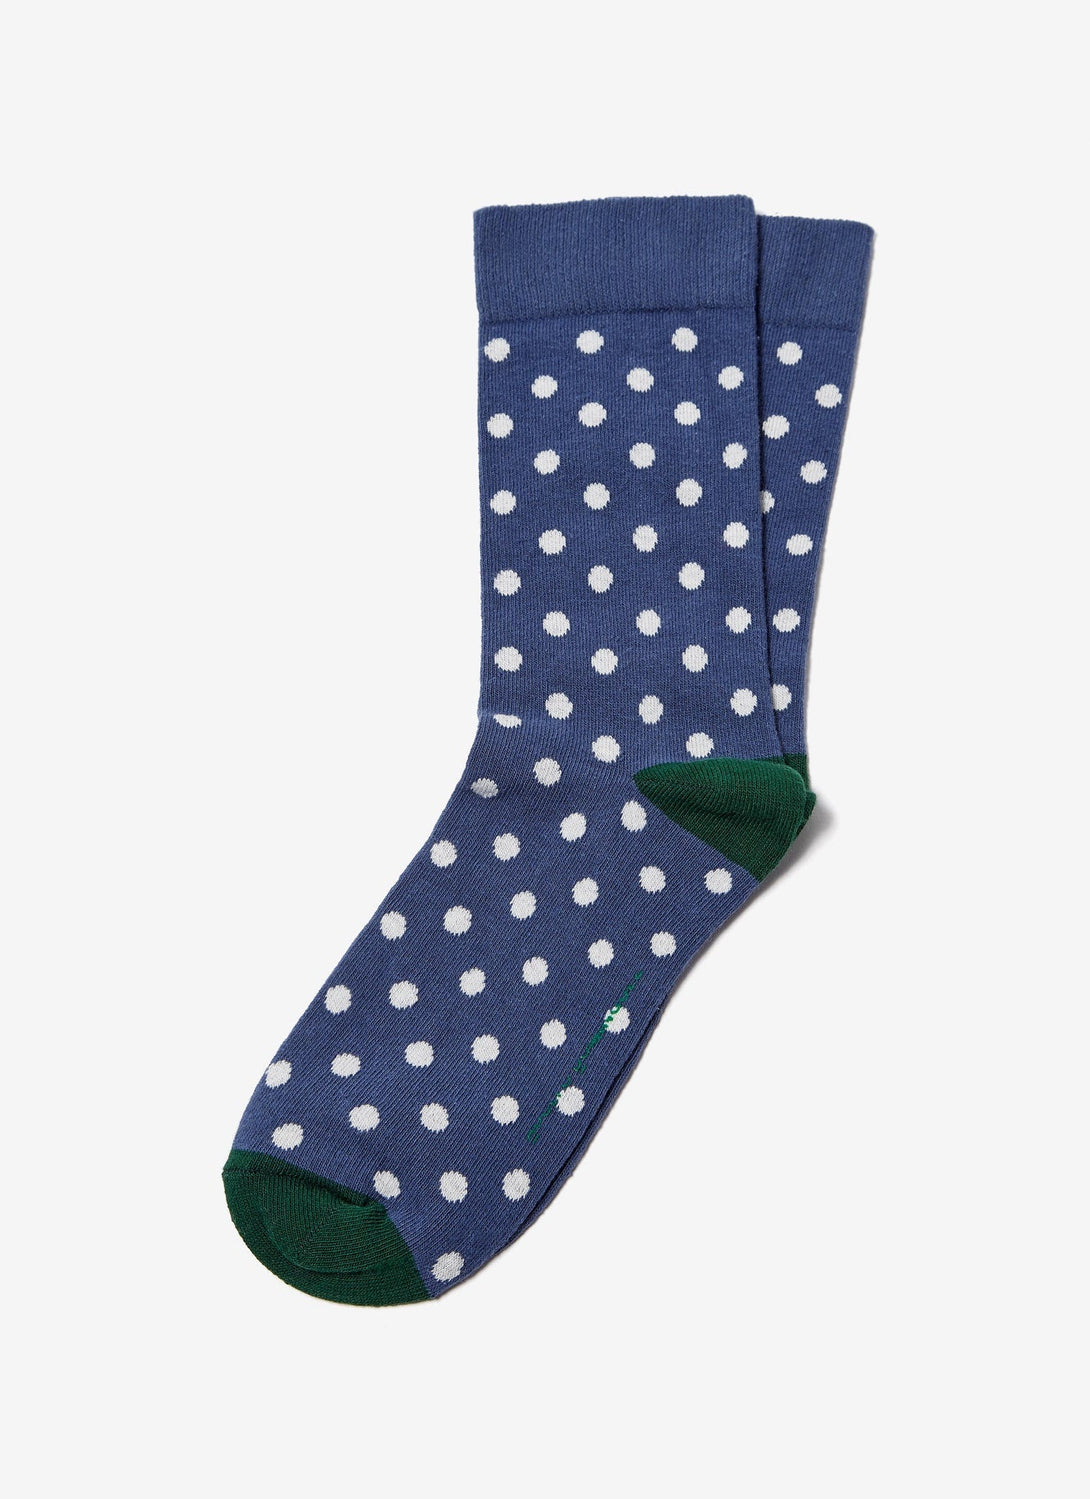 Men Socks | Blue/White Ankle Socks With Polka Dots by Spanish designer Adolfo Dominguez